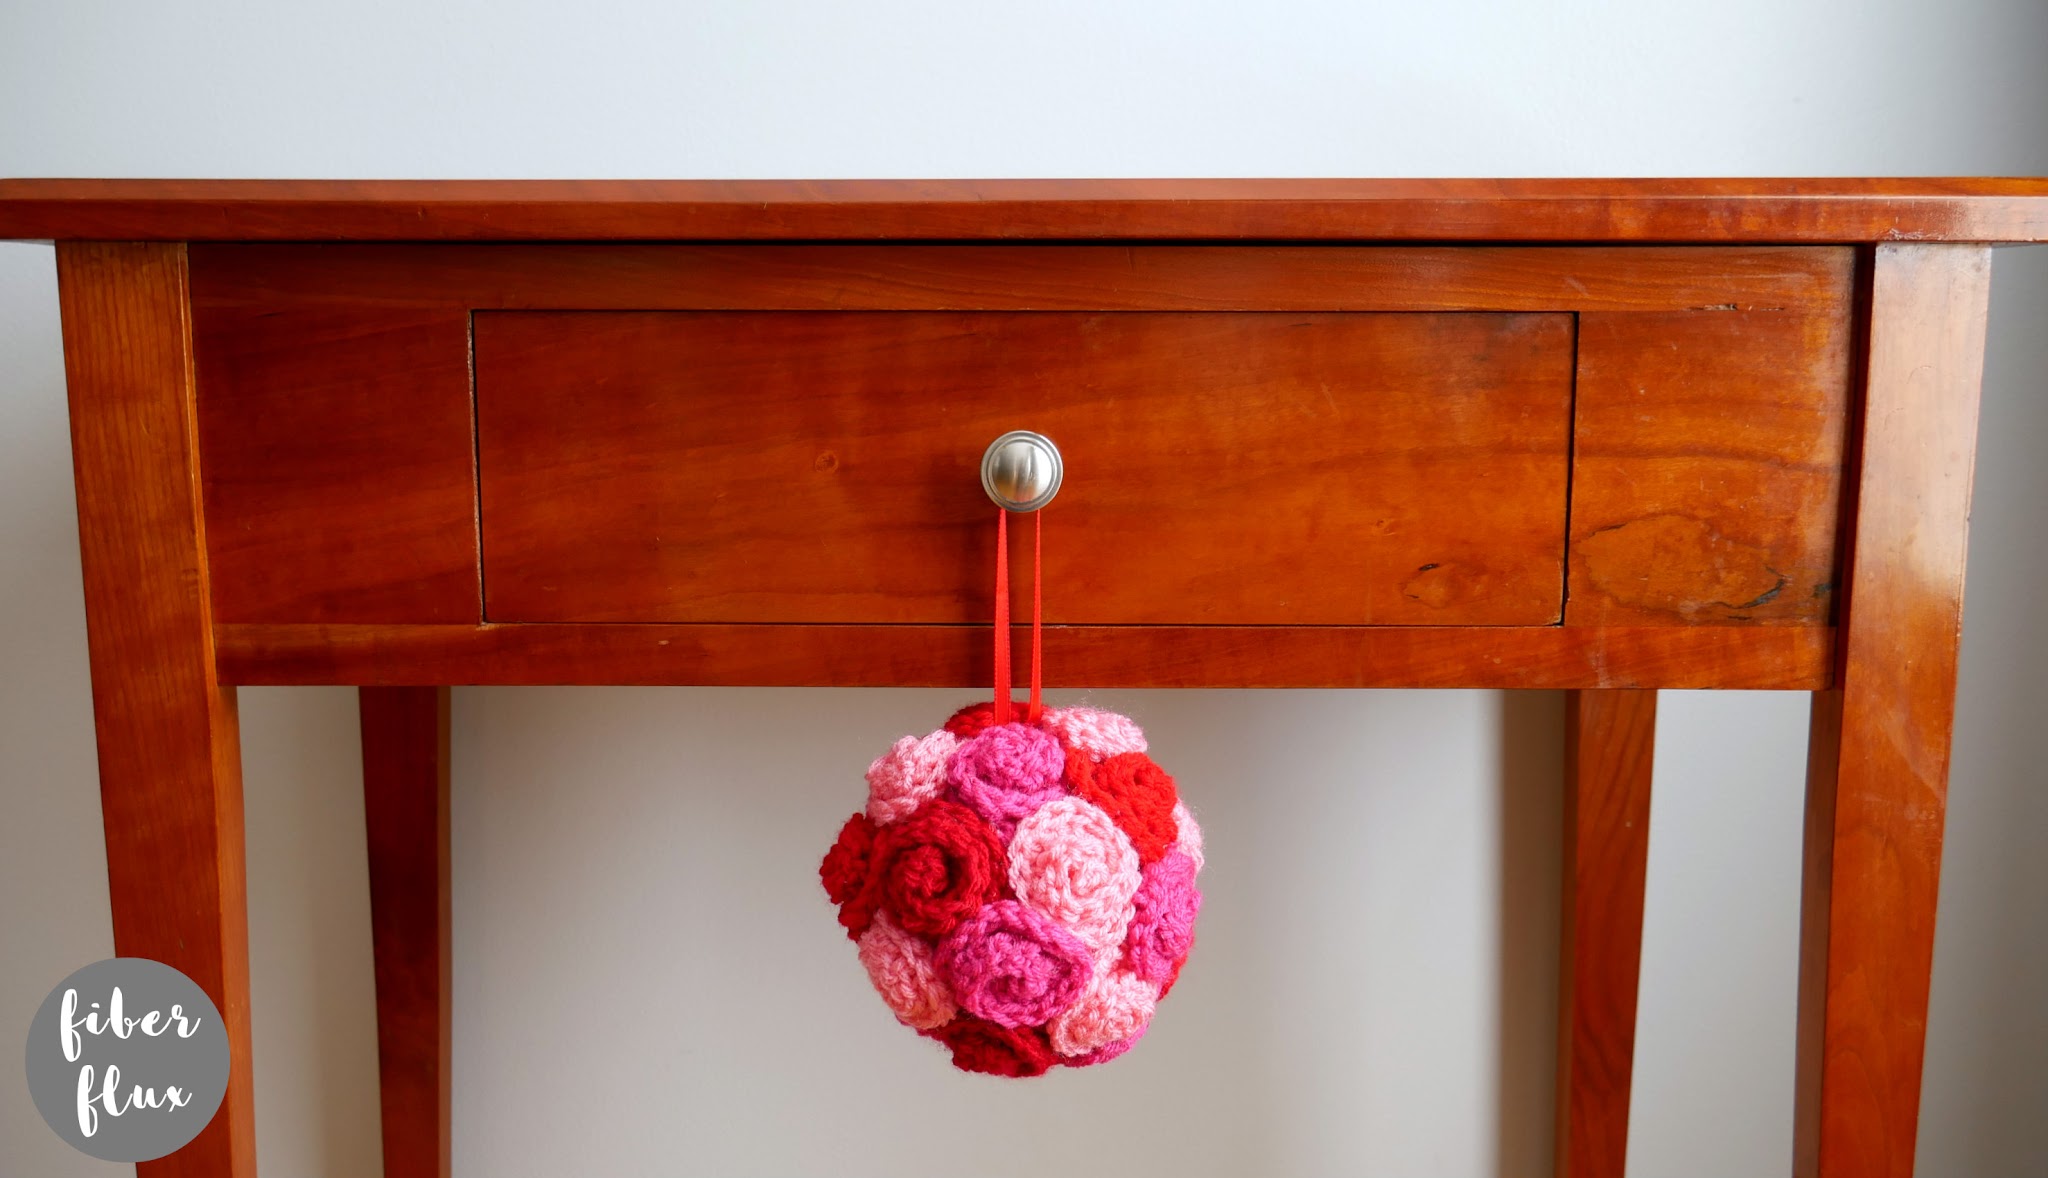 Valentine Rose Crochet Ball